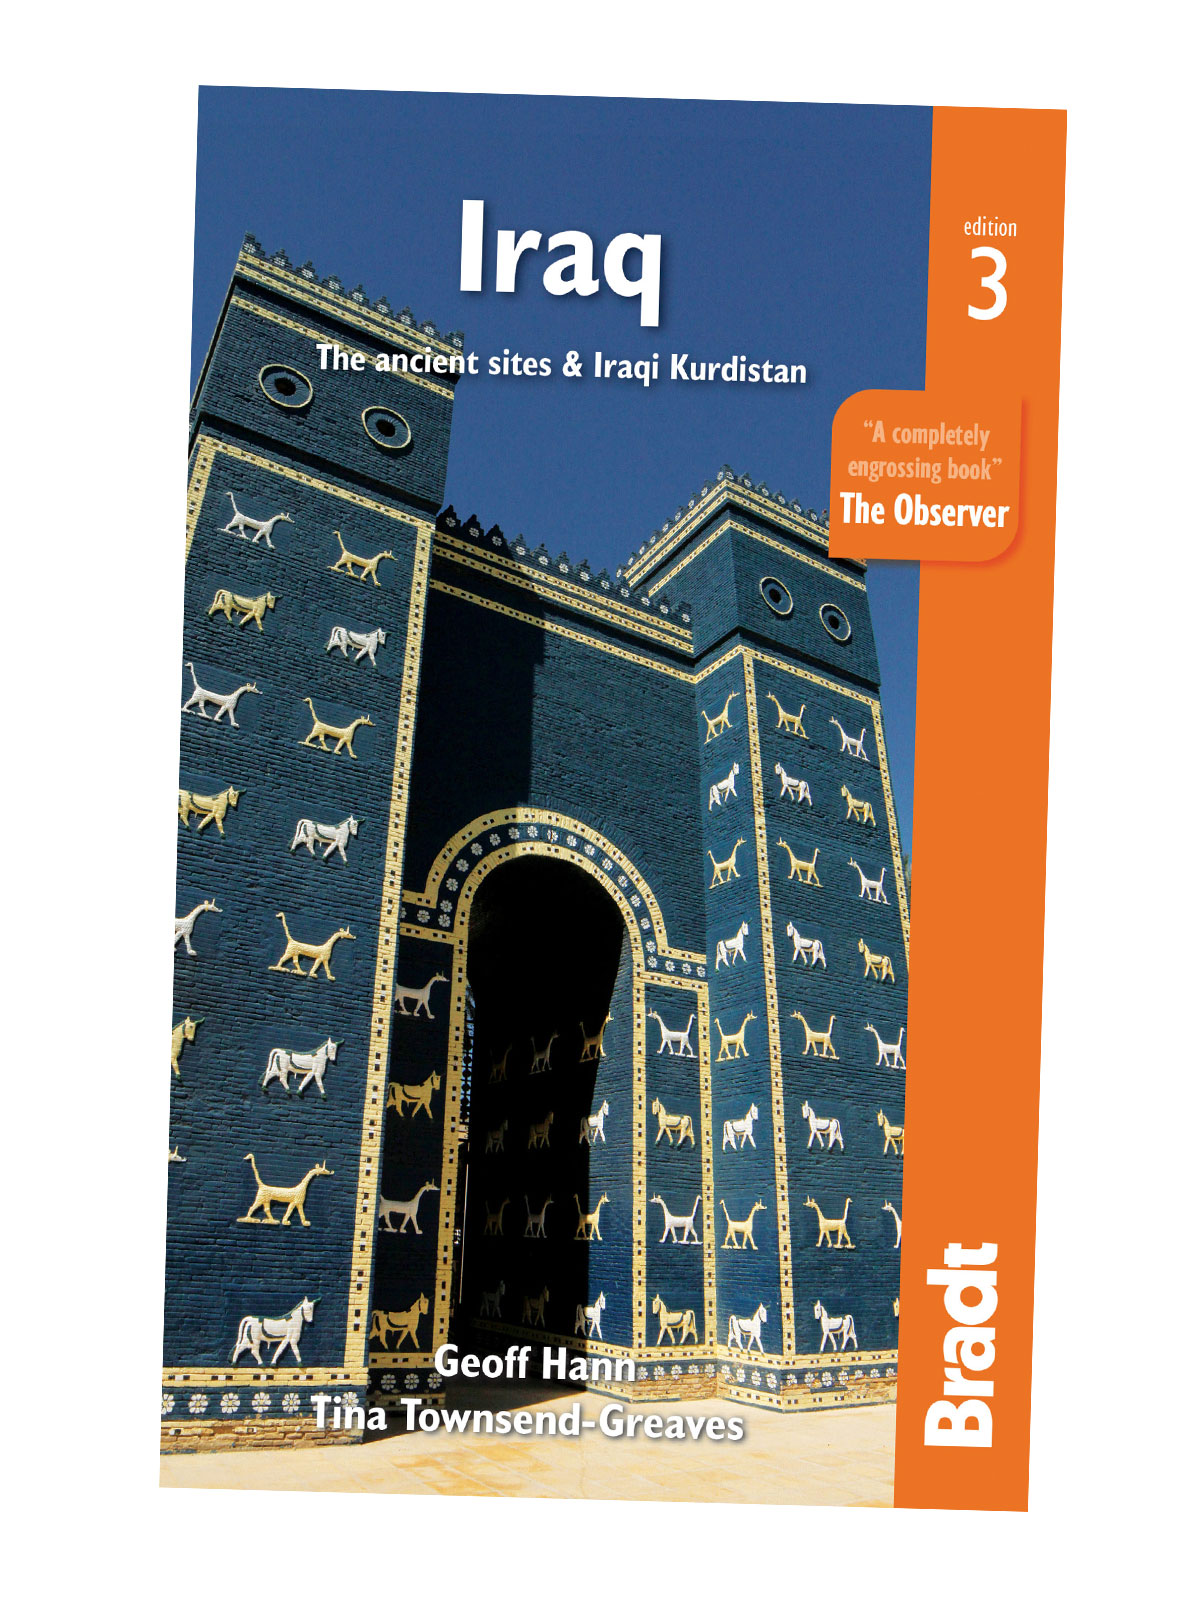 Iraq reiseguide